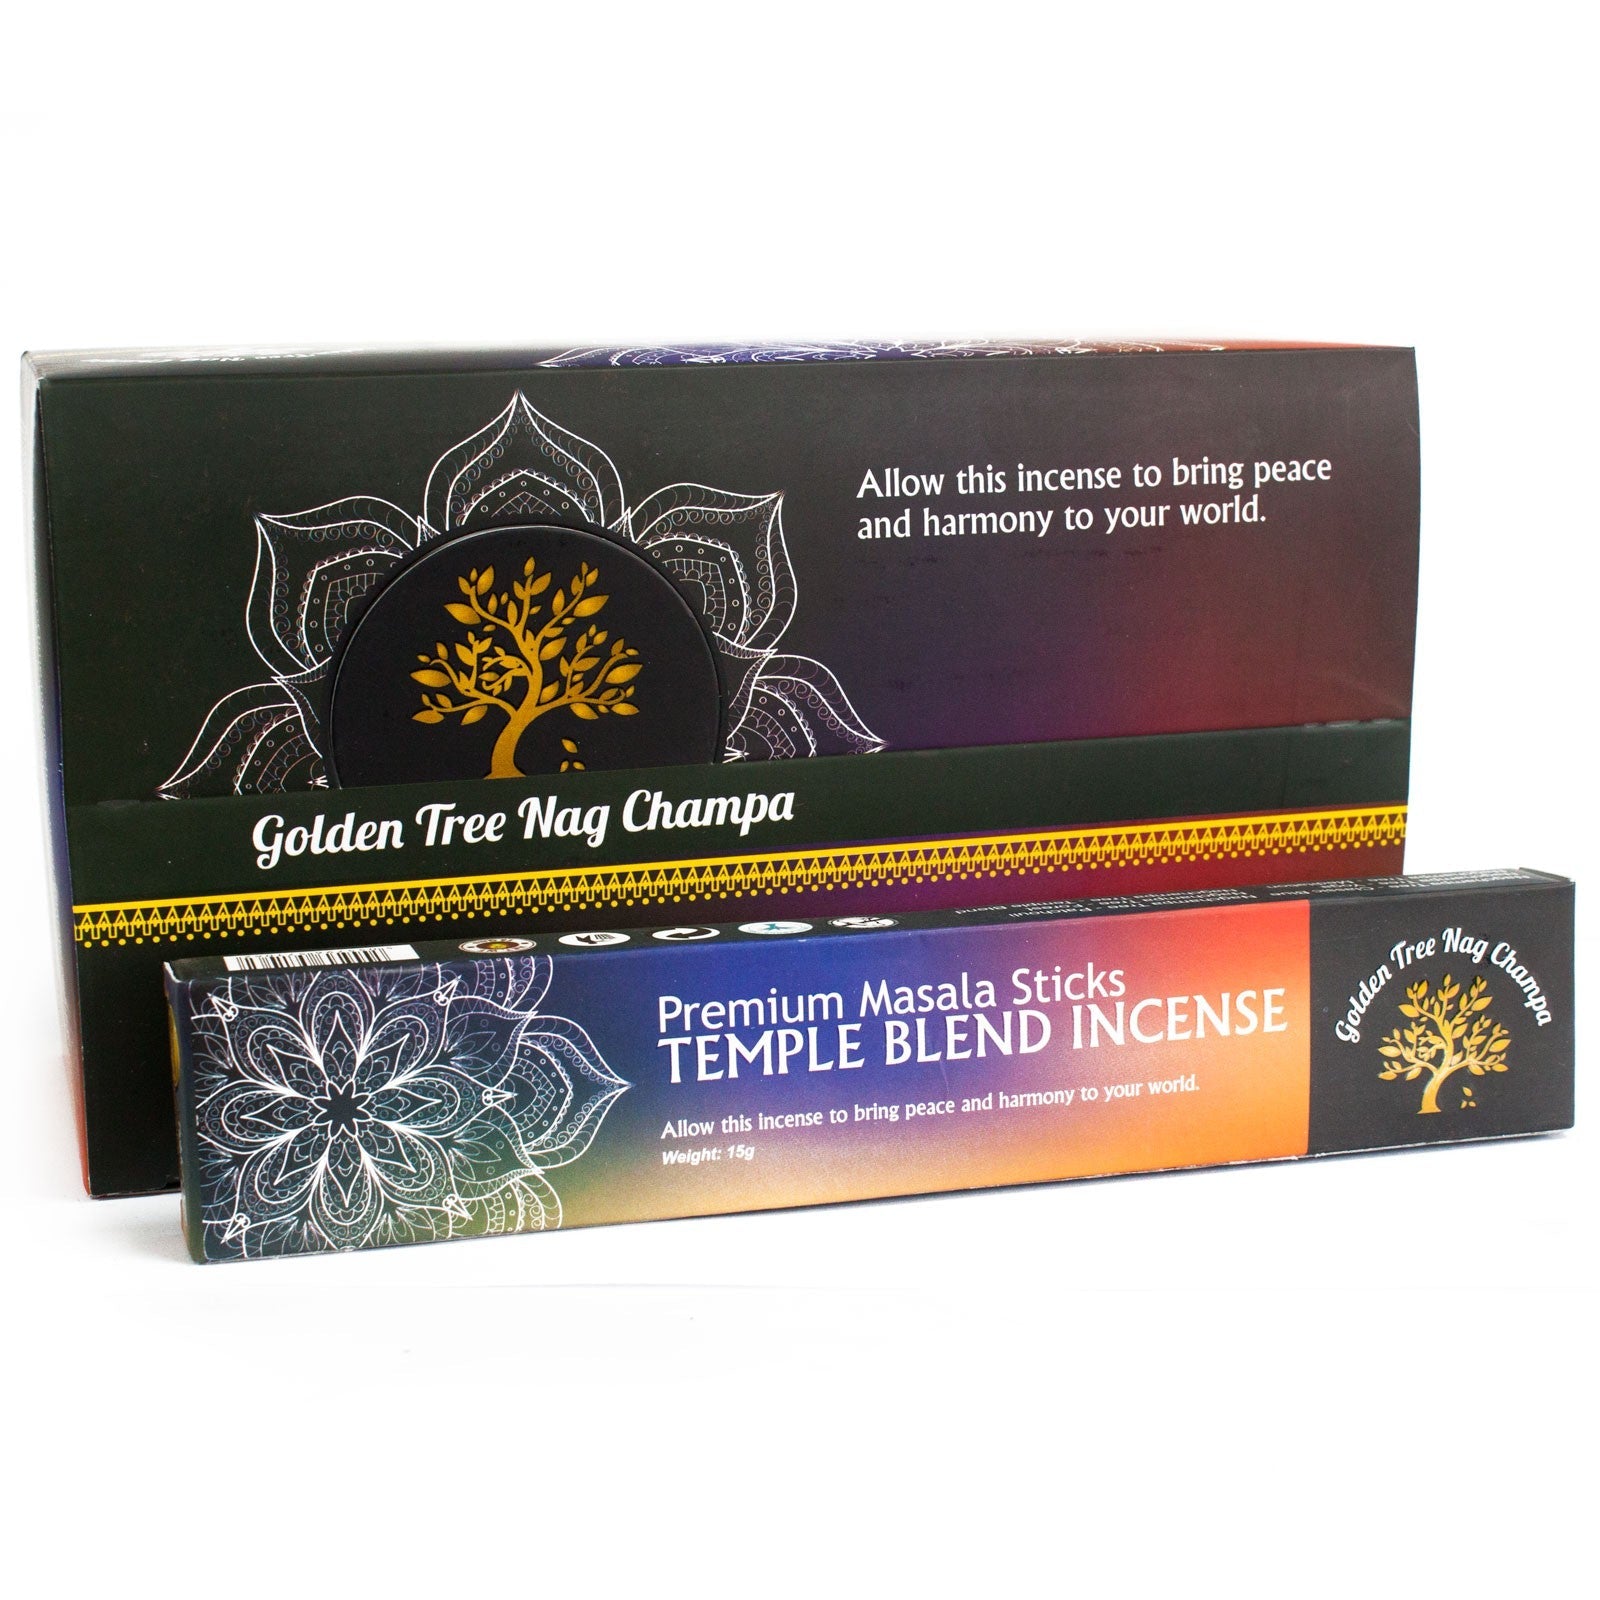 Premium Golden Tree Nag Champa Incense Sticks incense sticks Soul Inspired Temple Blend 